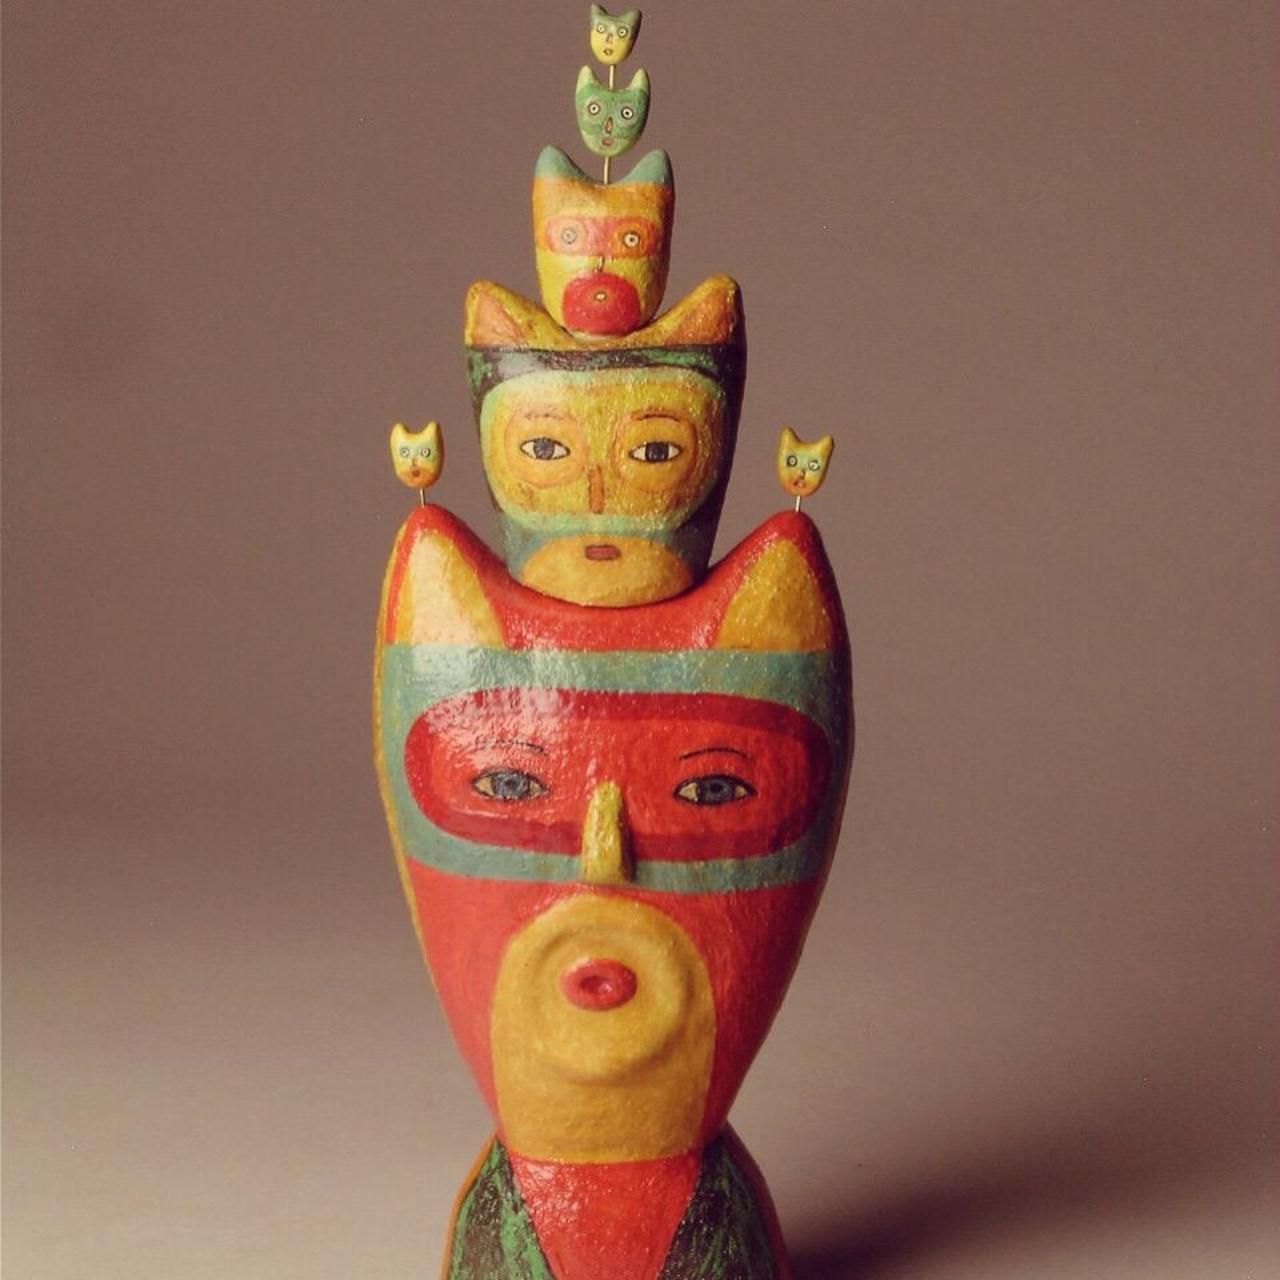 Face Jar Stack 10.5 x 4 x 2” #ceramics #art #artsy #artist #clay #contemporary #collectart #love http://t.co/eiyXX4M6xw